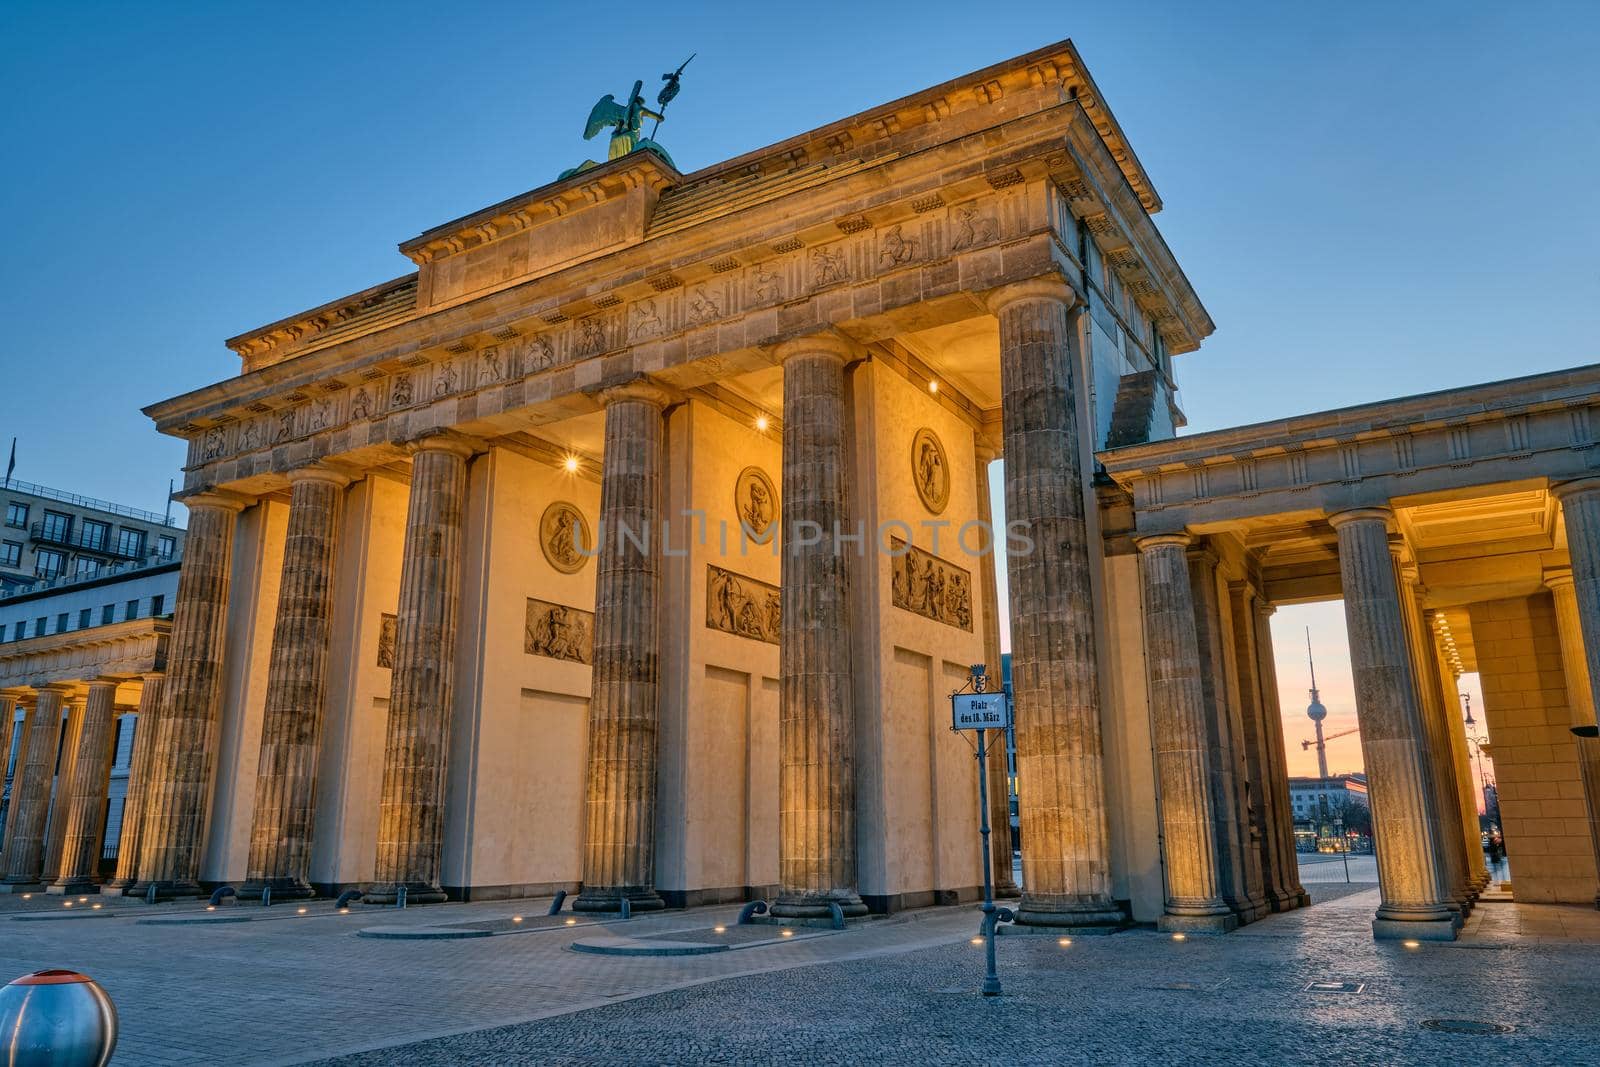 The back side of the famous Brandenburg Gate in Berlin before sunrise by elxeneize